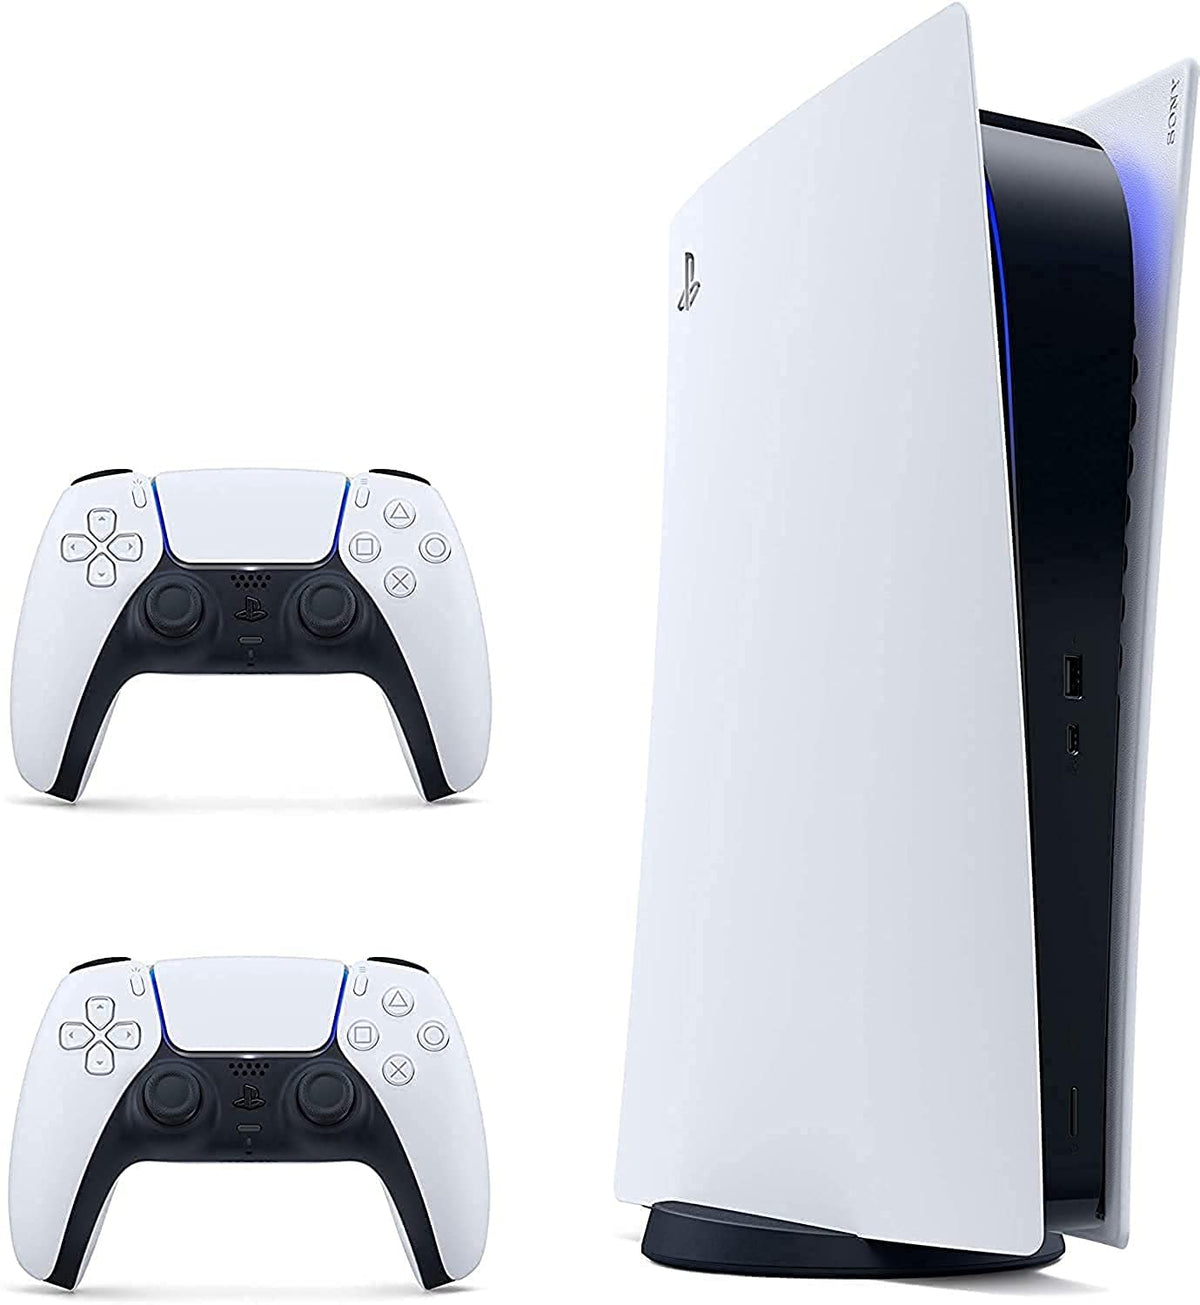 Playstation 5 Digital Console Bundle with Extra DualSense Controller (UAE Version)